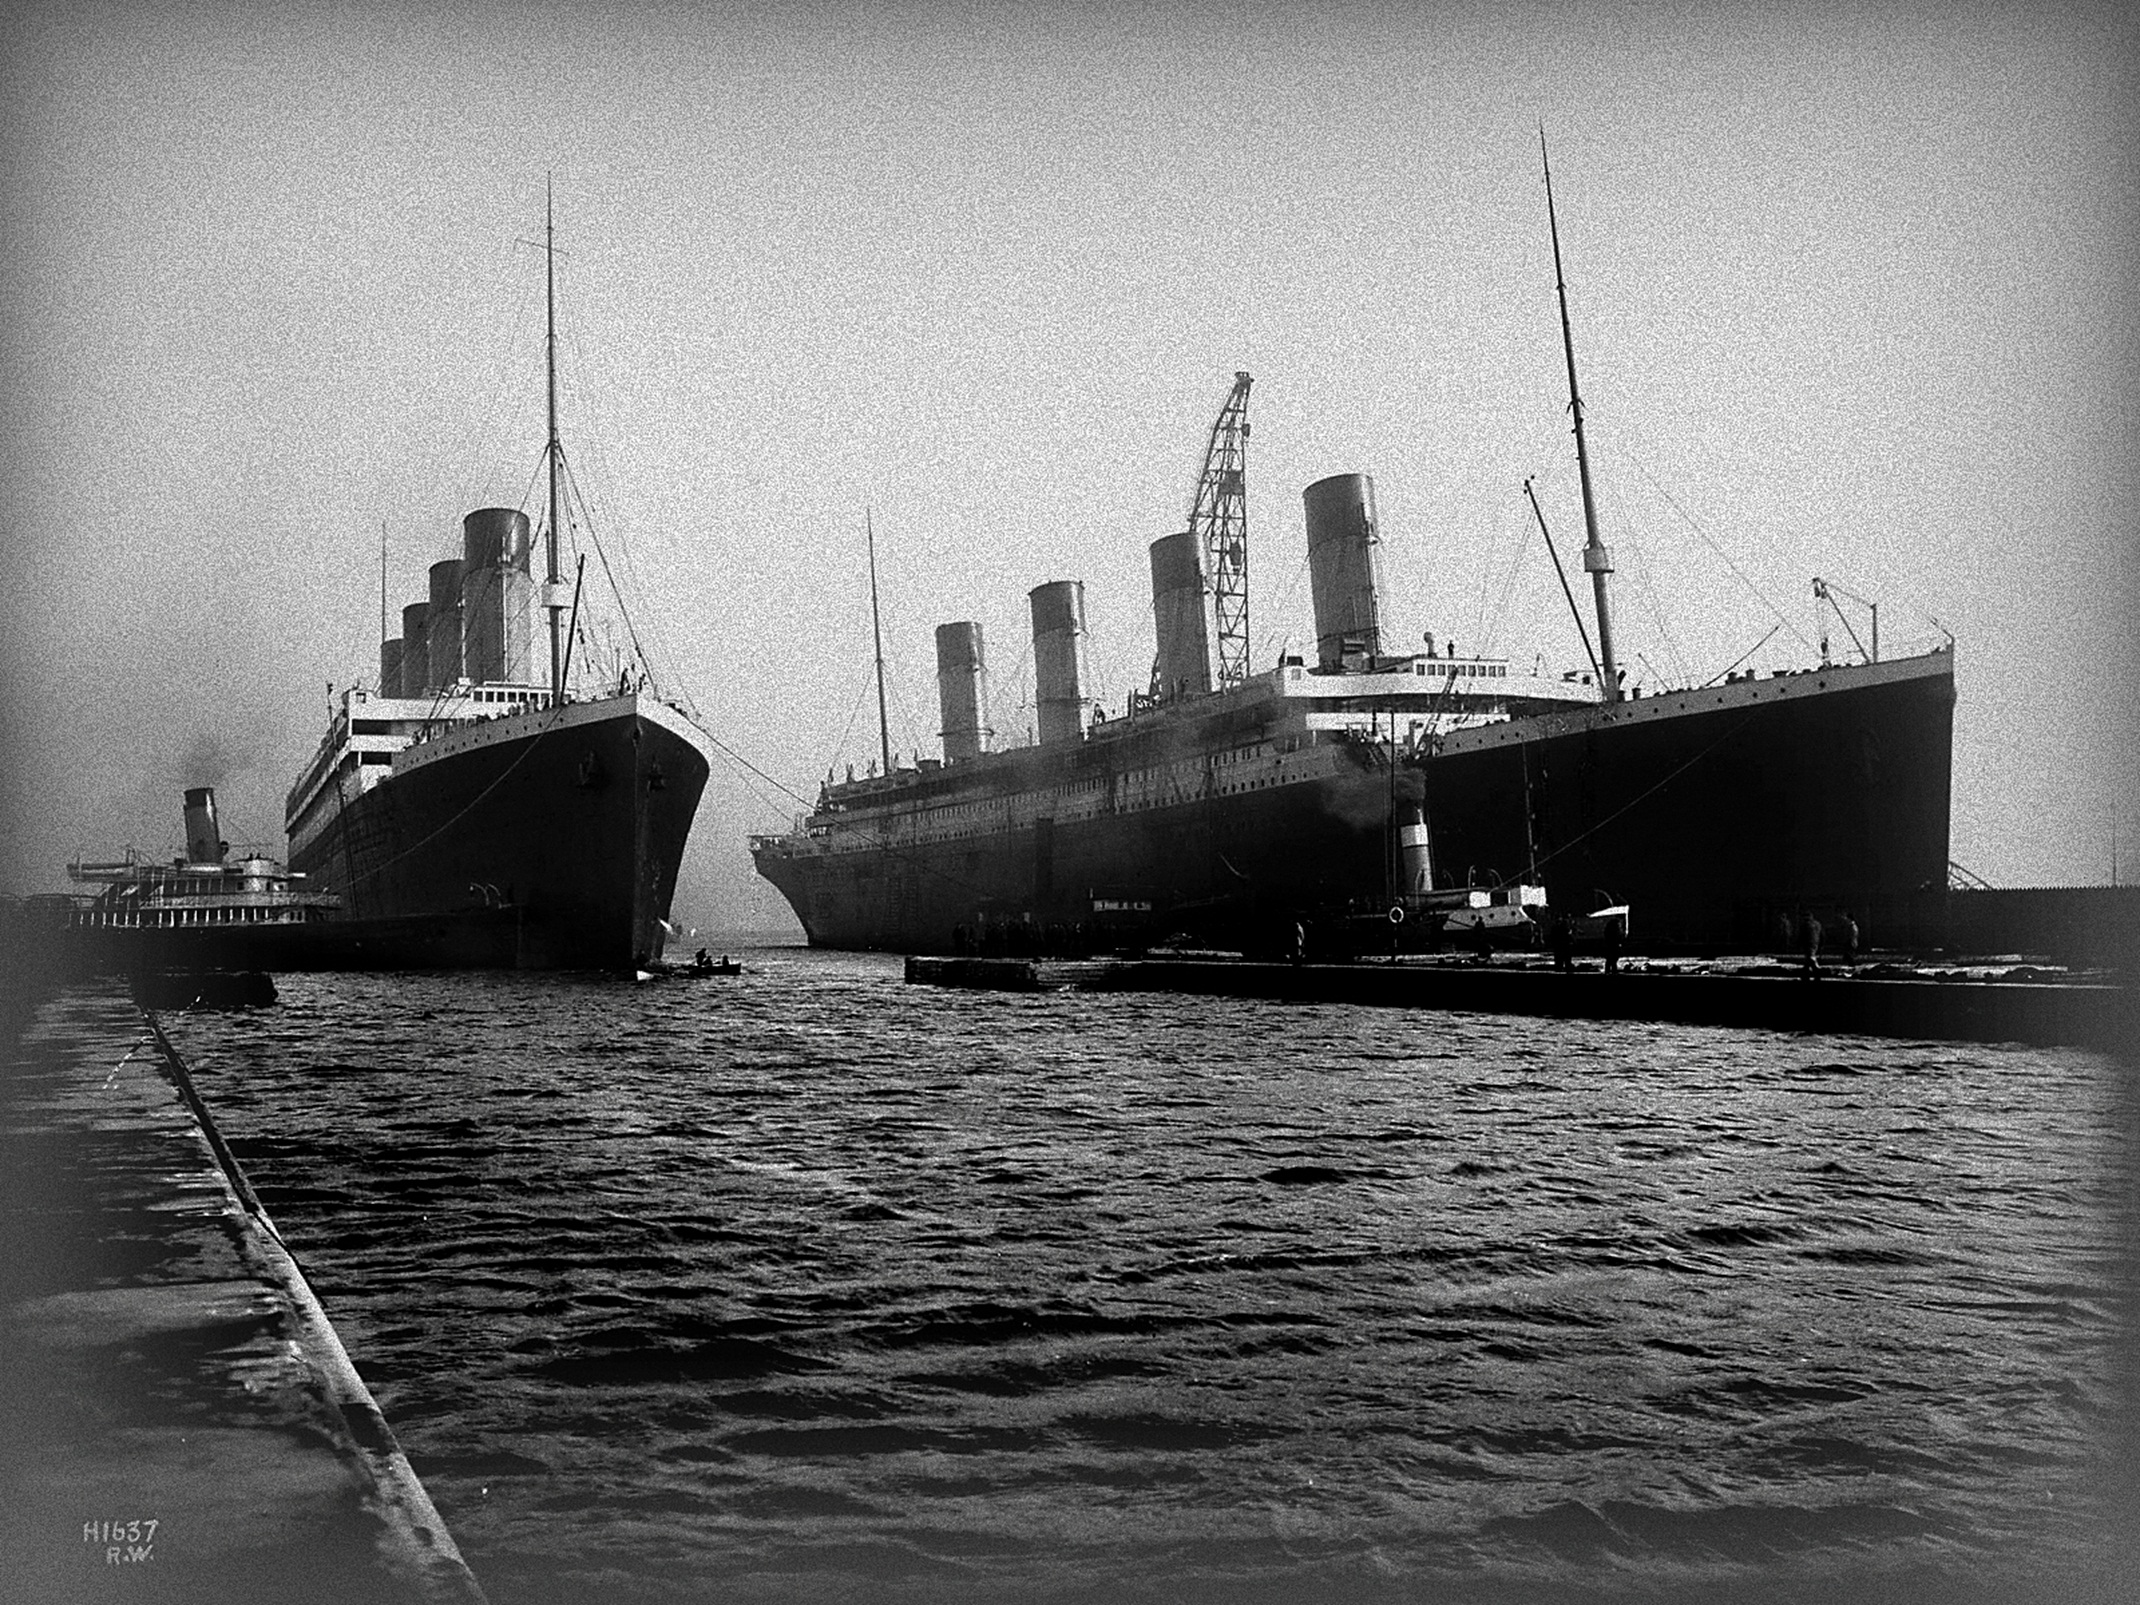 Rms Olympic Britannic Ultimate Titanic